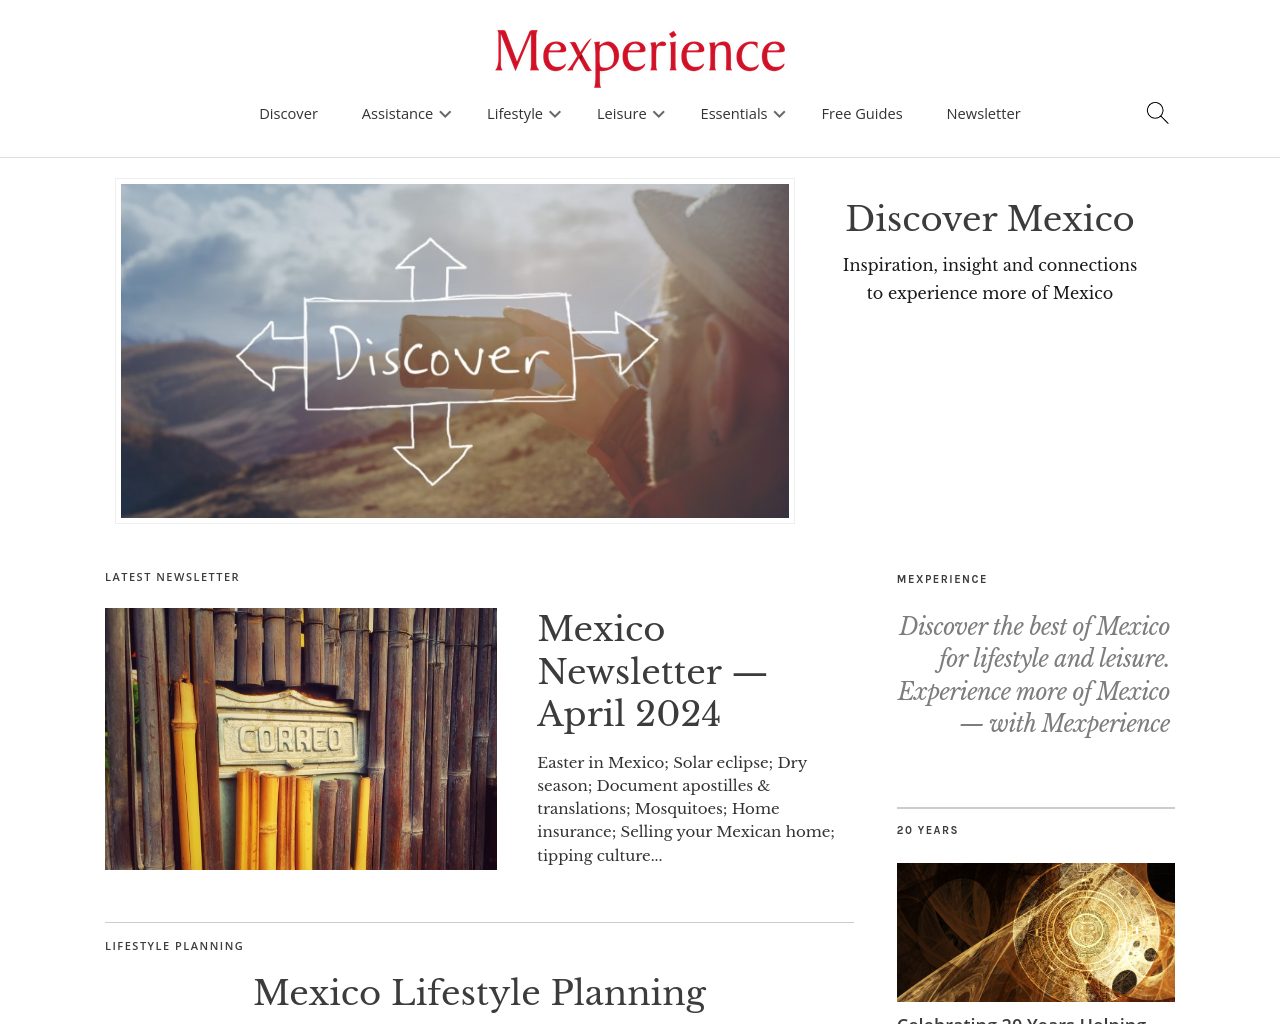 mexperience.com